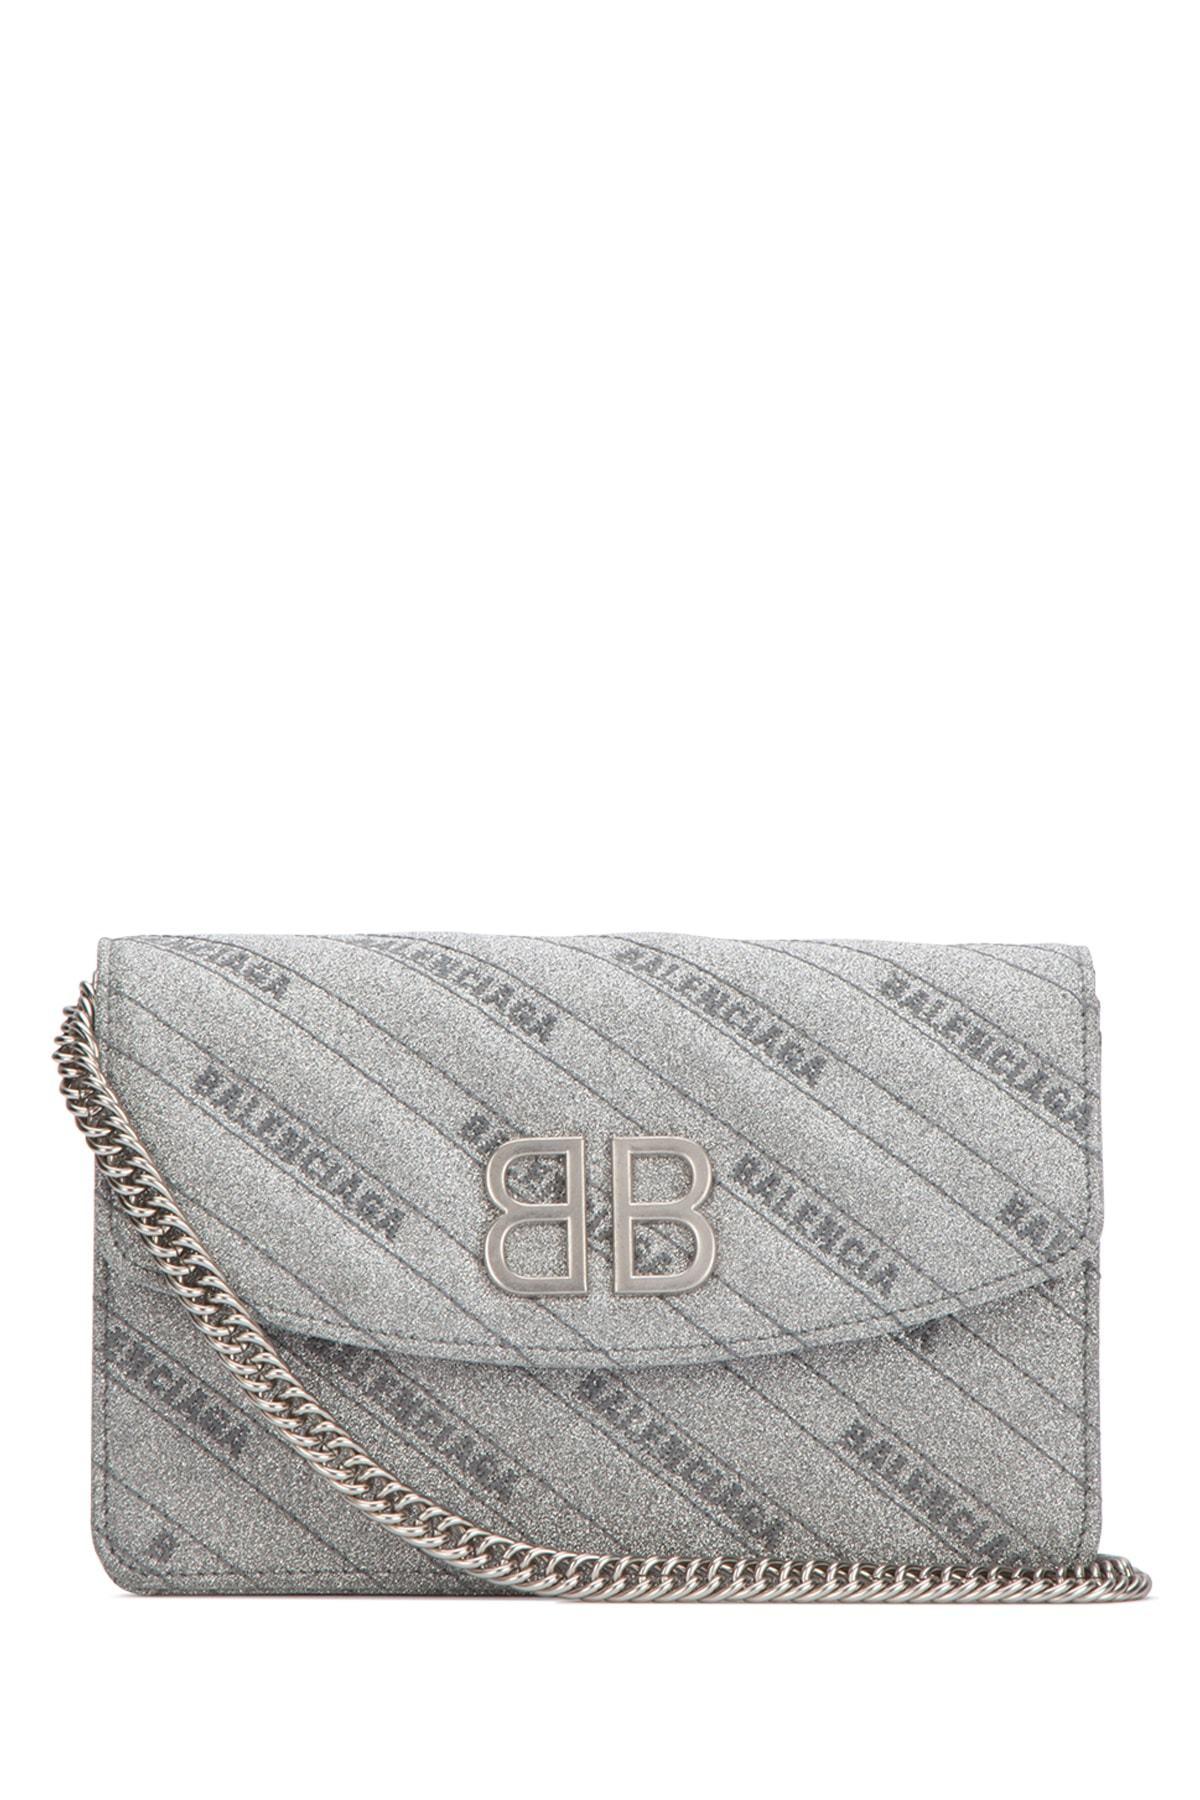 Balenciaga Leather Bb Chain Wallet Glitter Bag in Silver (Metallic) | Lyst